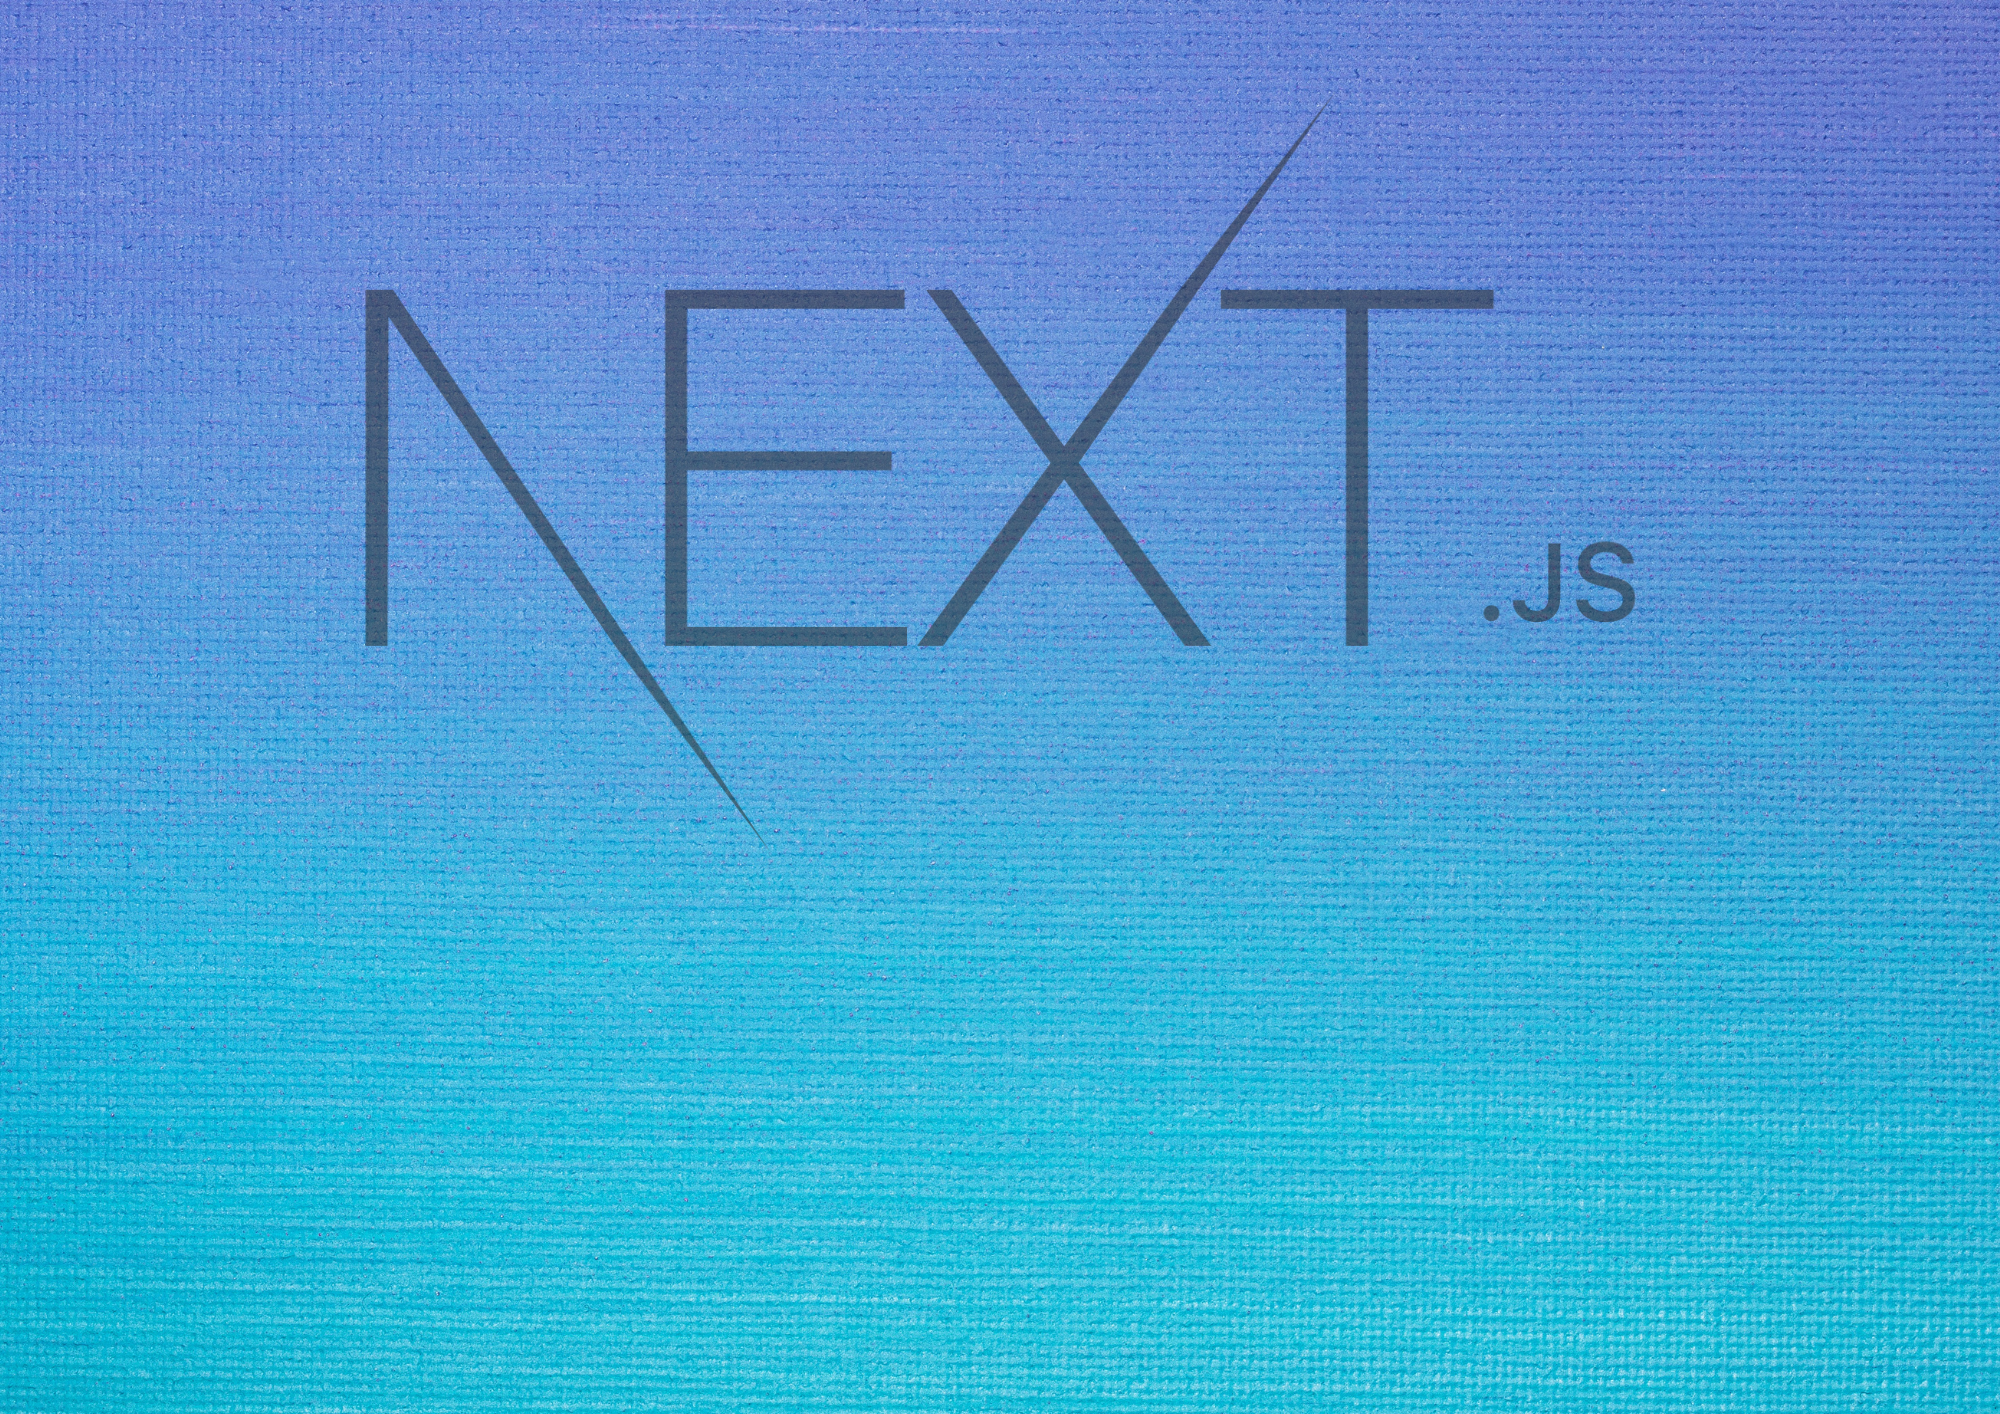 NextJS Core Web Vitals - remove render blocking CSS